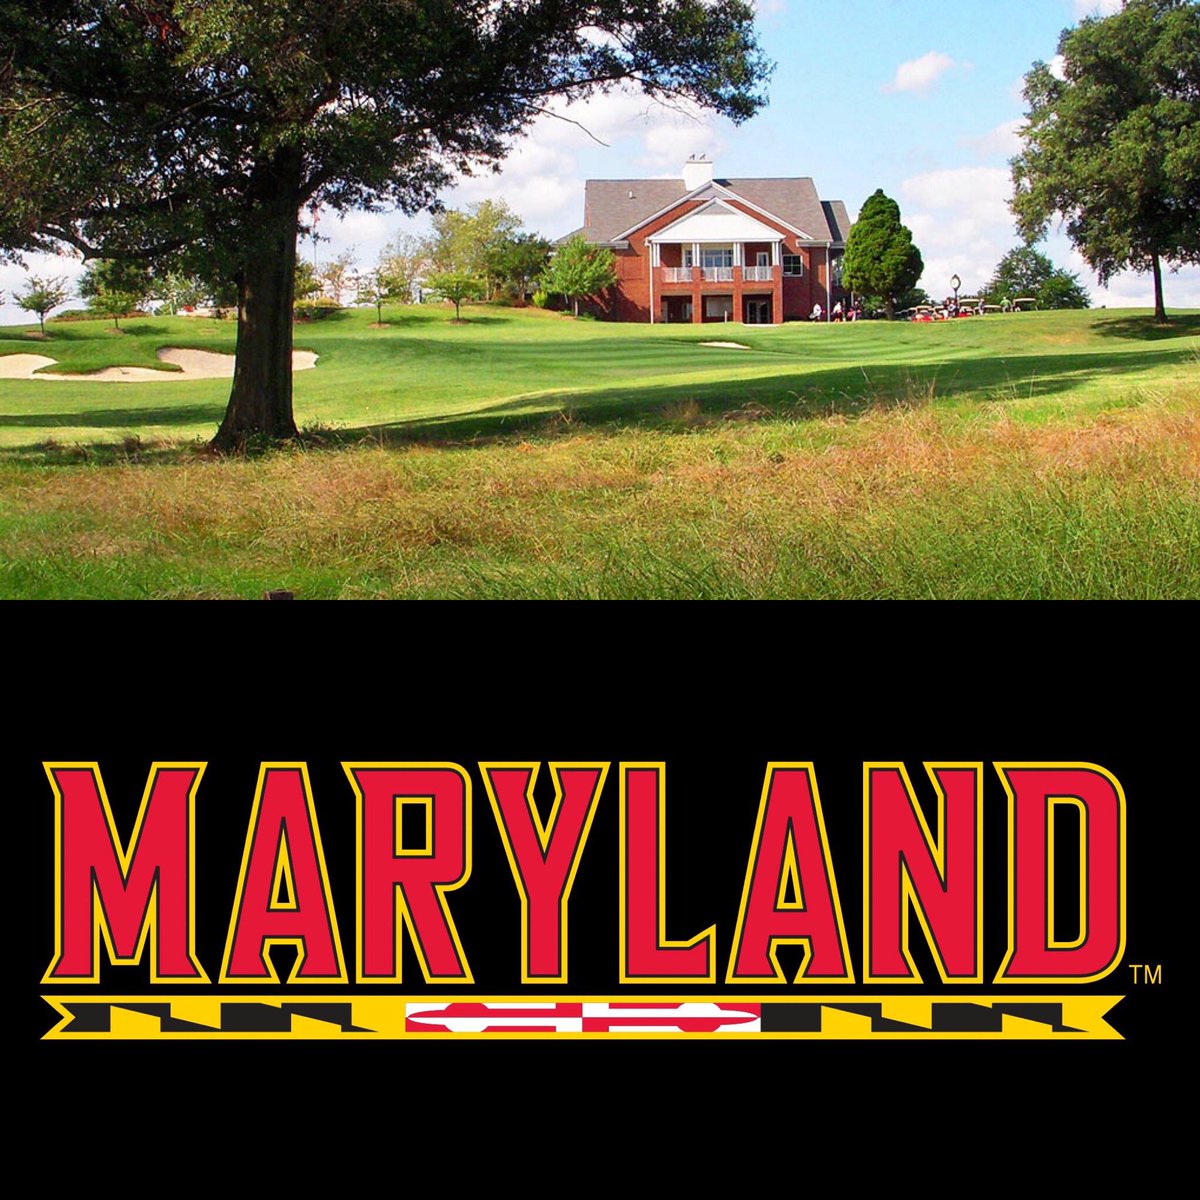 Next Stop: @UMDGolfCourse and @umterps!!! 🐢⛳️😎💥 
#Maryland #MarylandTerps #GoTerps #MarylandTerrapins #FearTheTurle #FTT #OneMaryland #GolfTerps #CollegeAthletics #NCAA #B1GMGolf #B1GWGolf #UMD #ProudThisHouse #UnderAmour